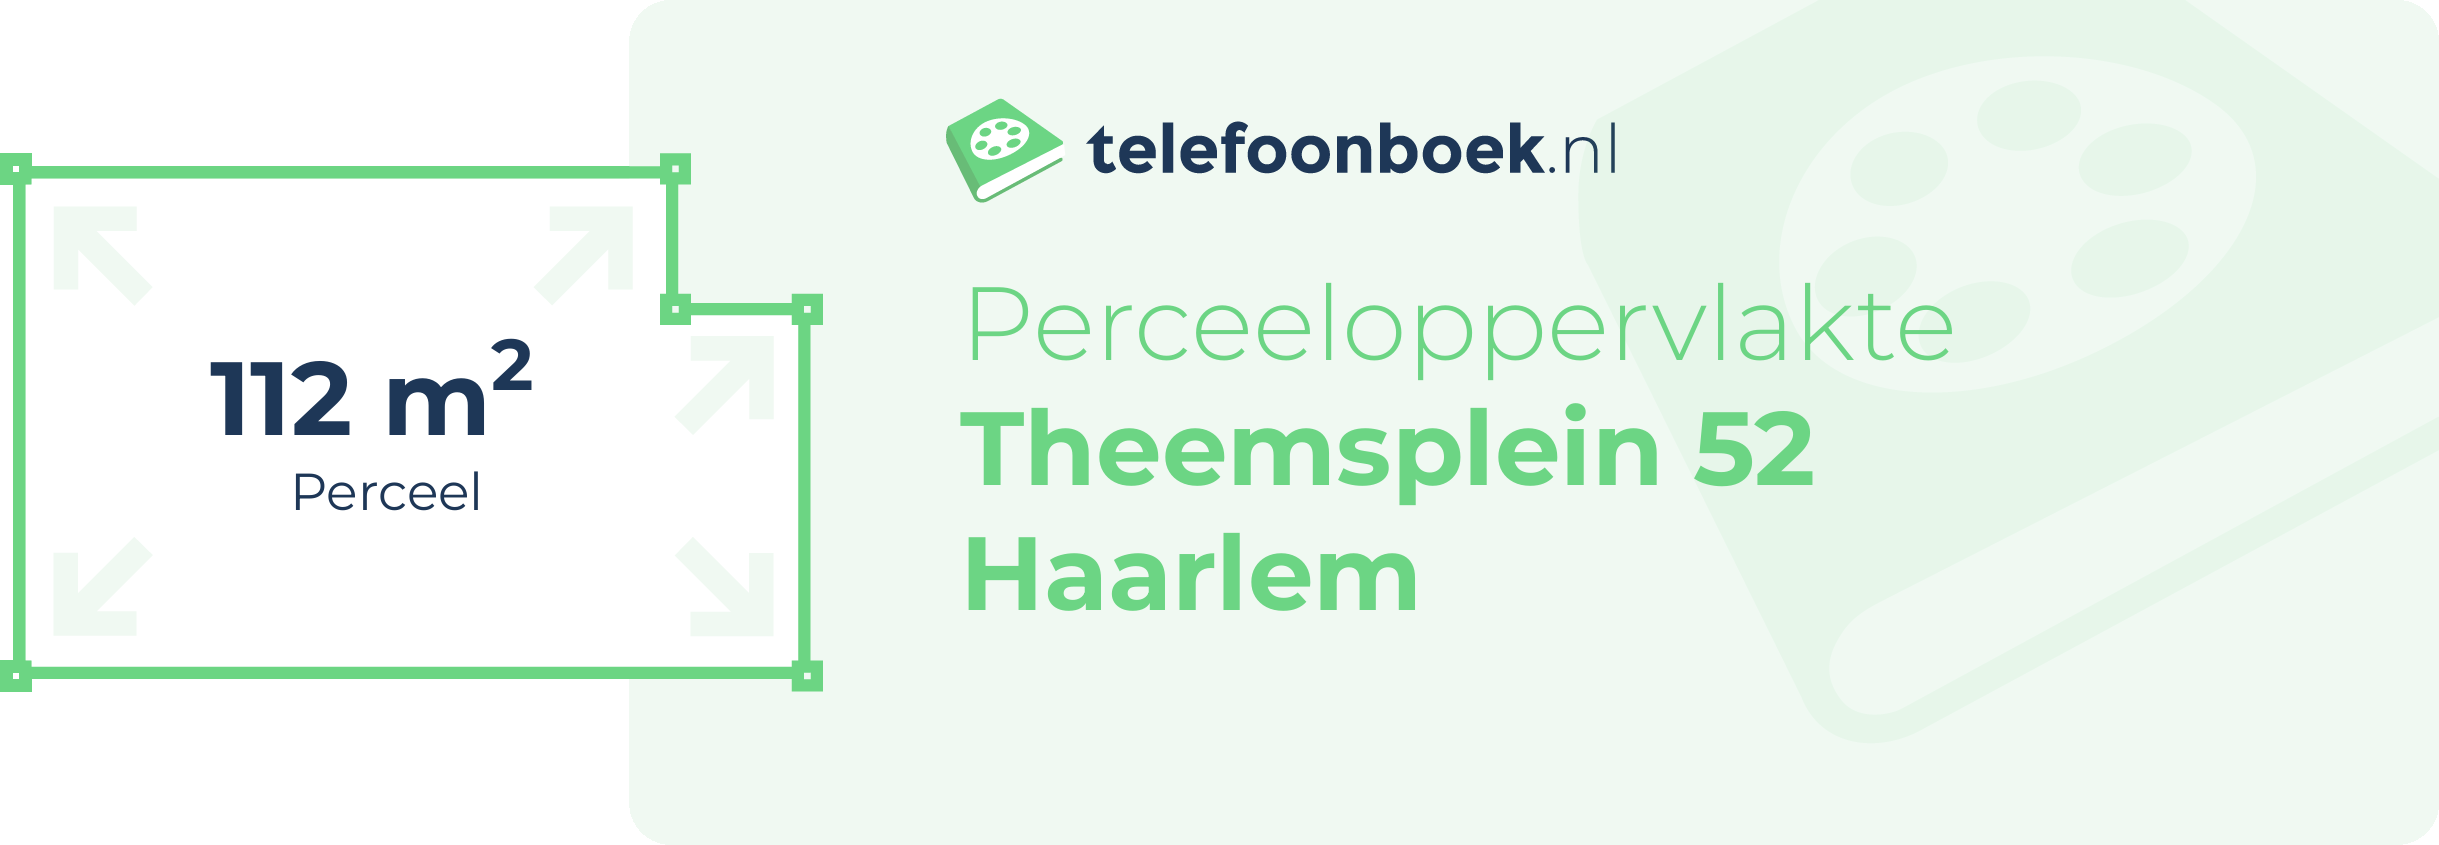 Perceeloppervlakte Theemsplein 52 Haarlem